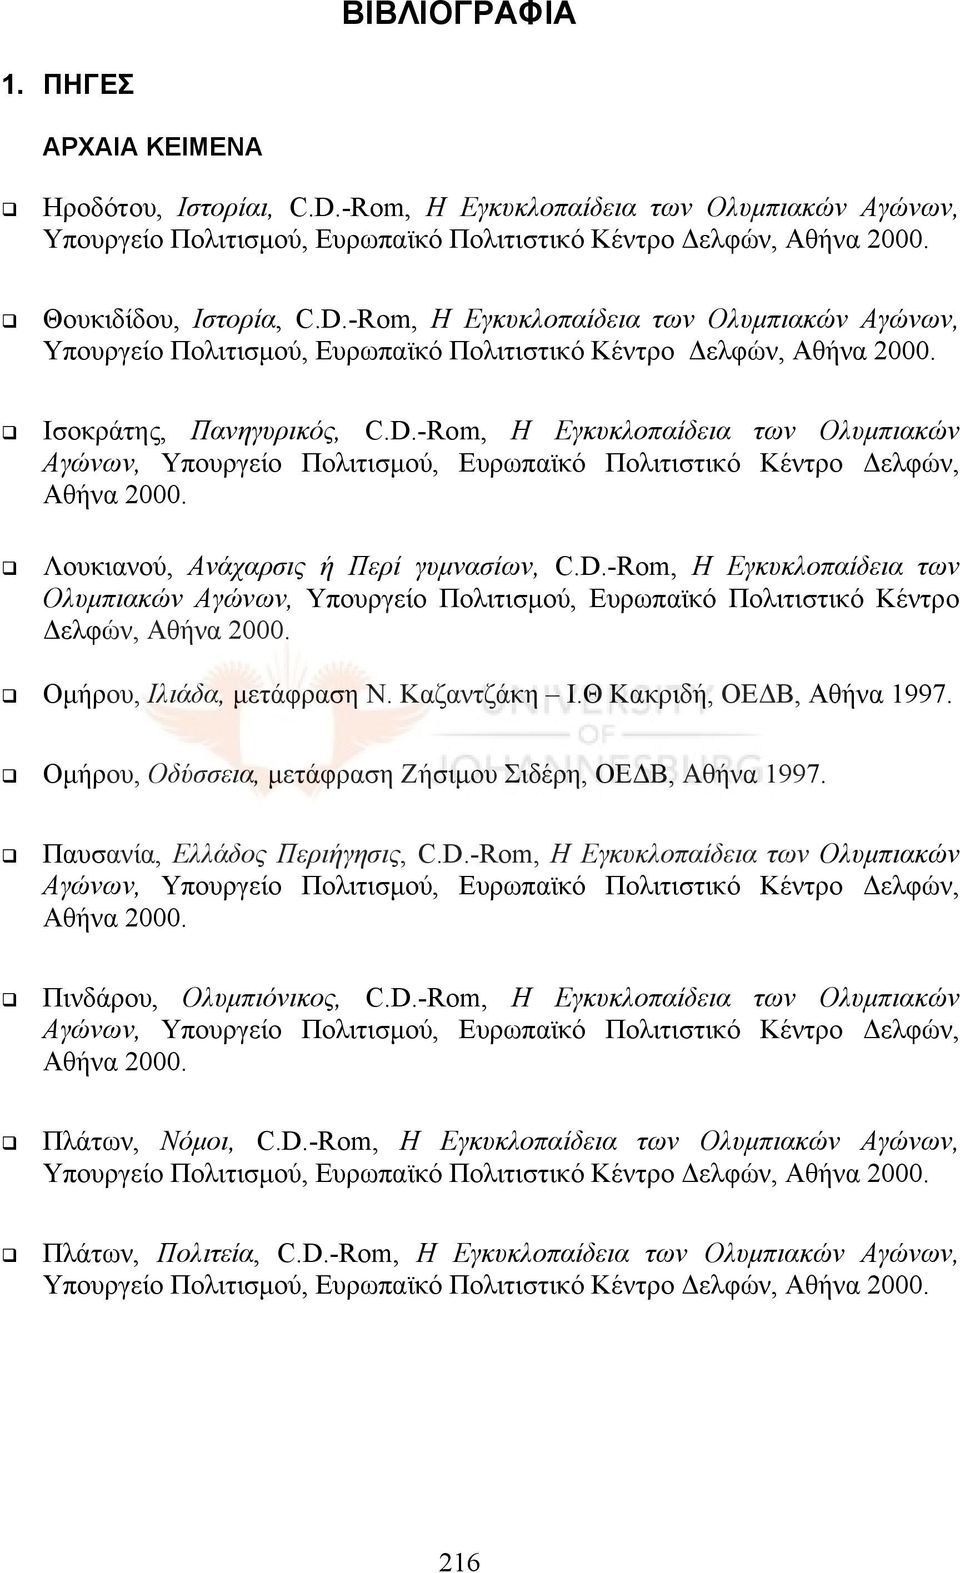 D.-Rom, Η Εγκυκλοπαίδεια των Ολυμπιακών Αγώνων, Υπουργείο Πολιτισμού, Ευρωπαϊκό Πολιτιστικό Κέντρο Δελφών, Αθήνα 2000. Ομήρου, Ιλιάδα, μετάφραση Ν. Καζαντζάκη Ι.Θ Κακριδή, ΟΕΔΒ, Αθήνα 1997.